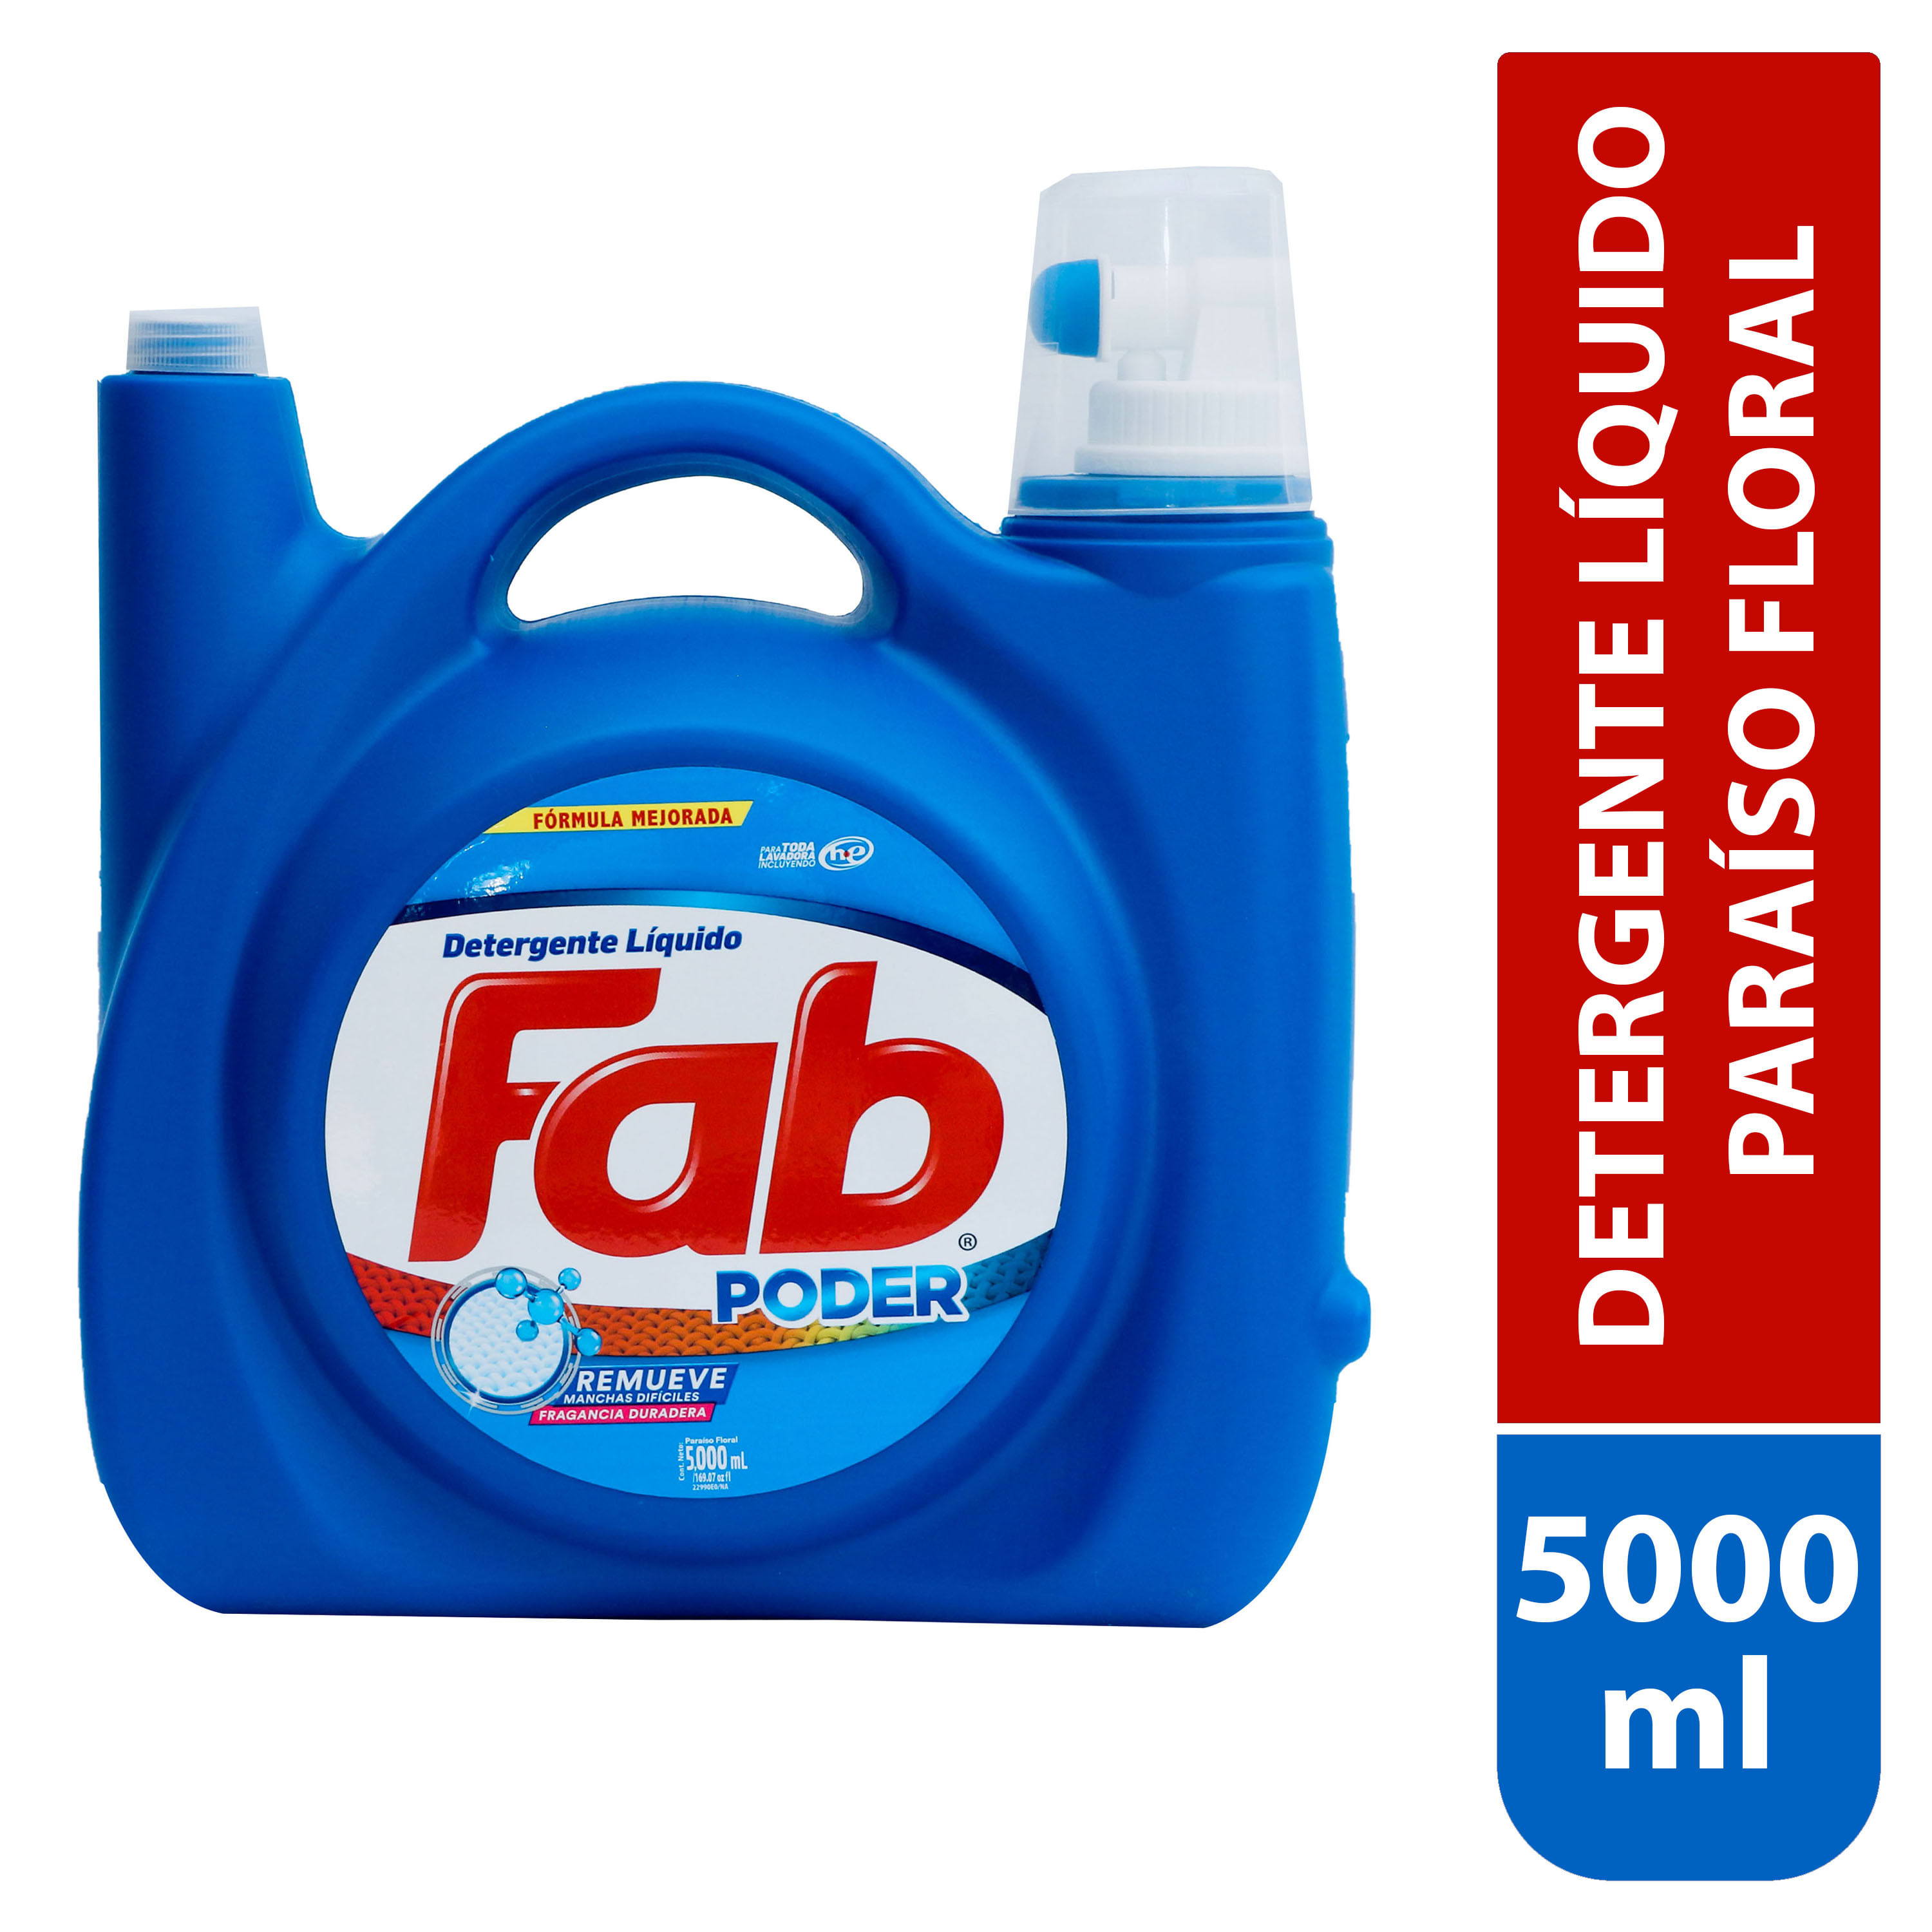 Detergente-Liquido-Fab-3-Acti-Blu-5000Ml-1-6473